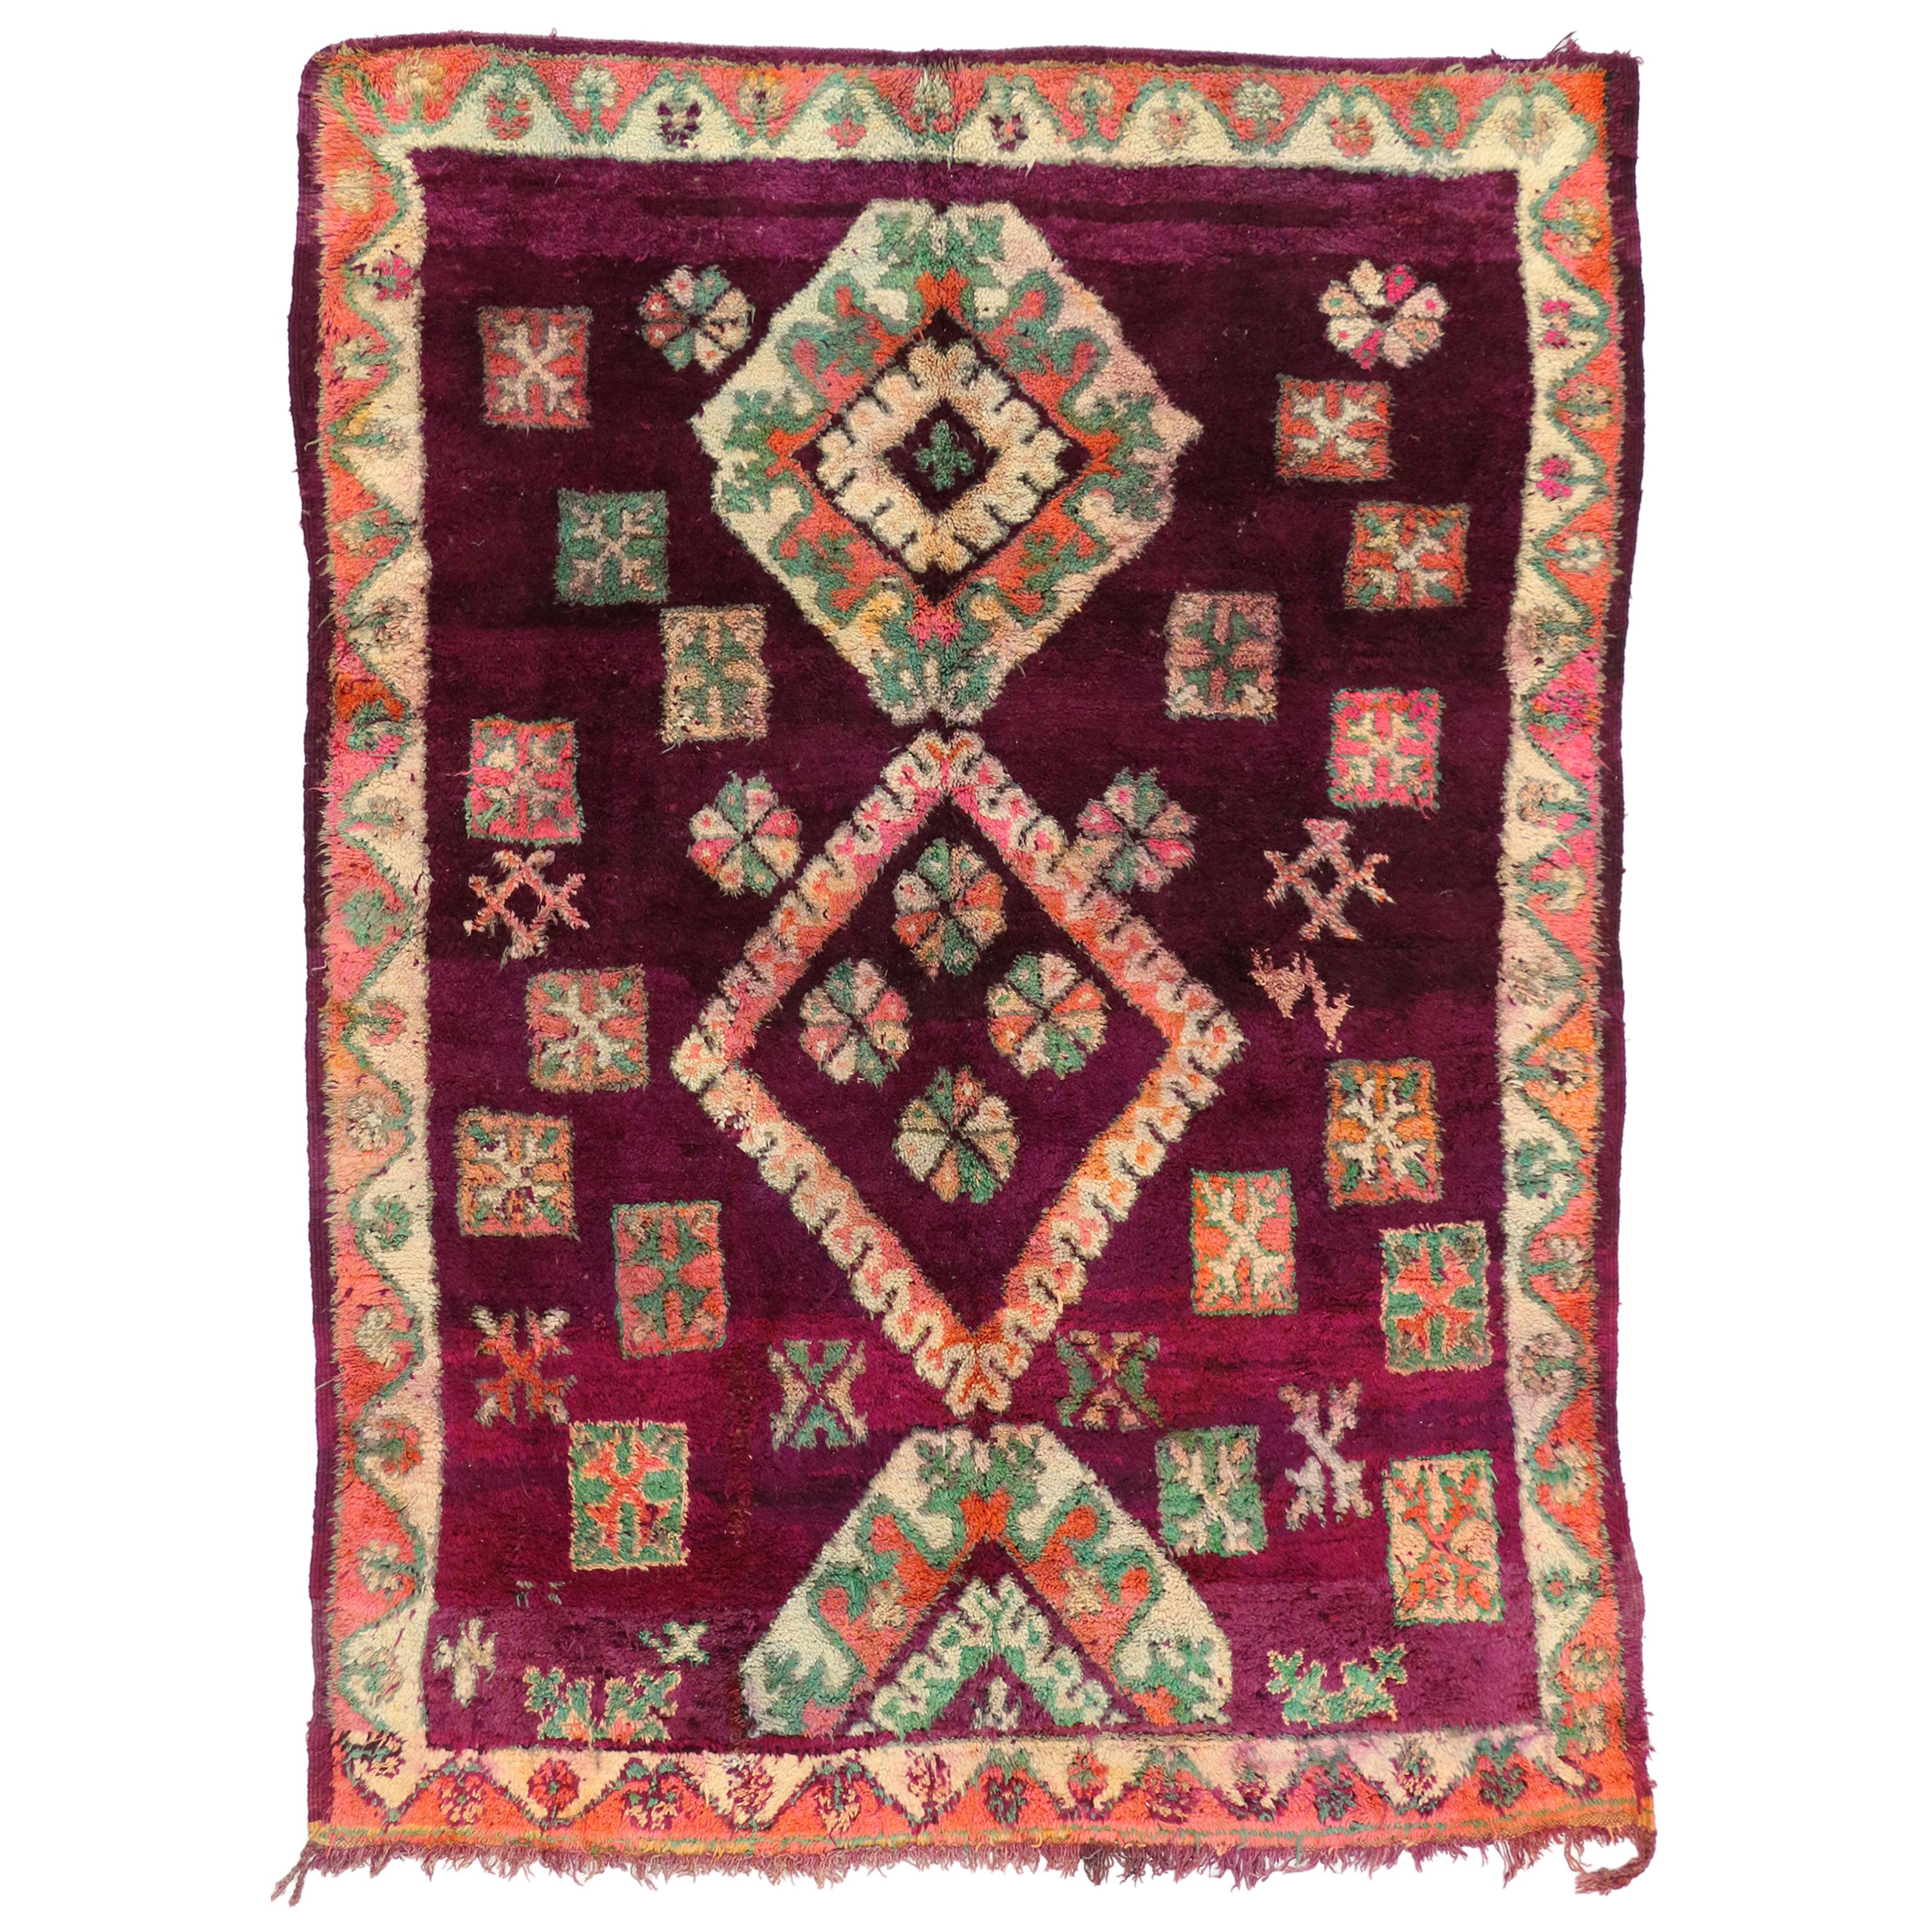 Tapis marocain vintage Boujad de style tribal, tapis berbère marocain coloré